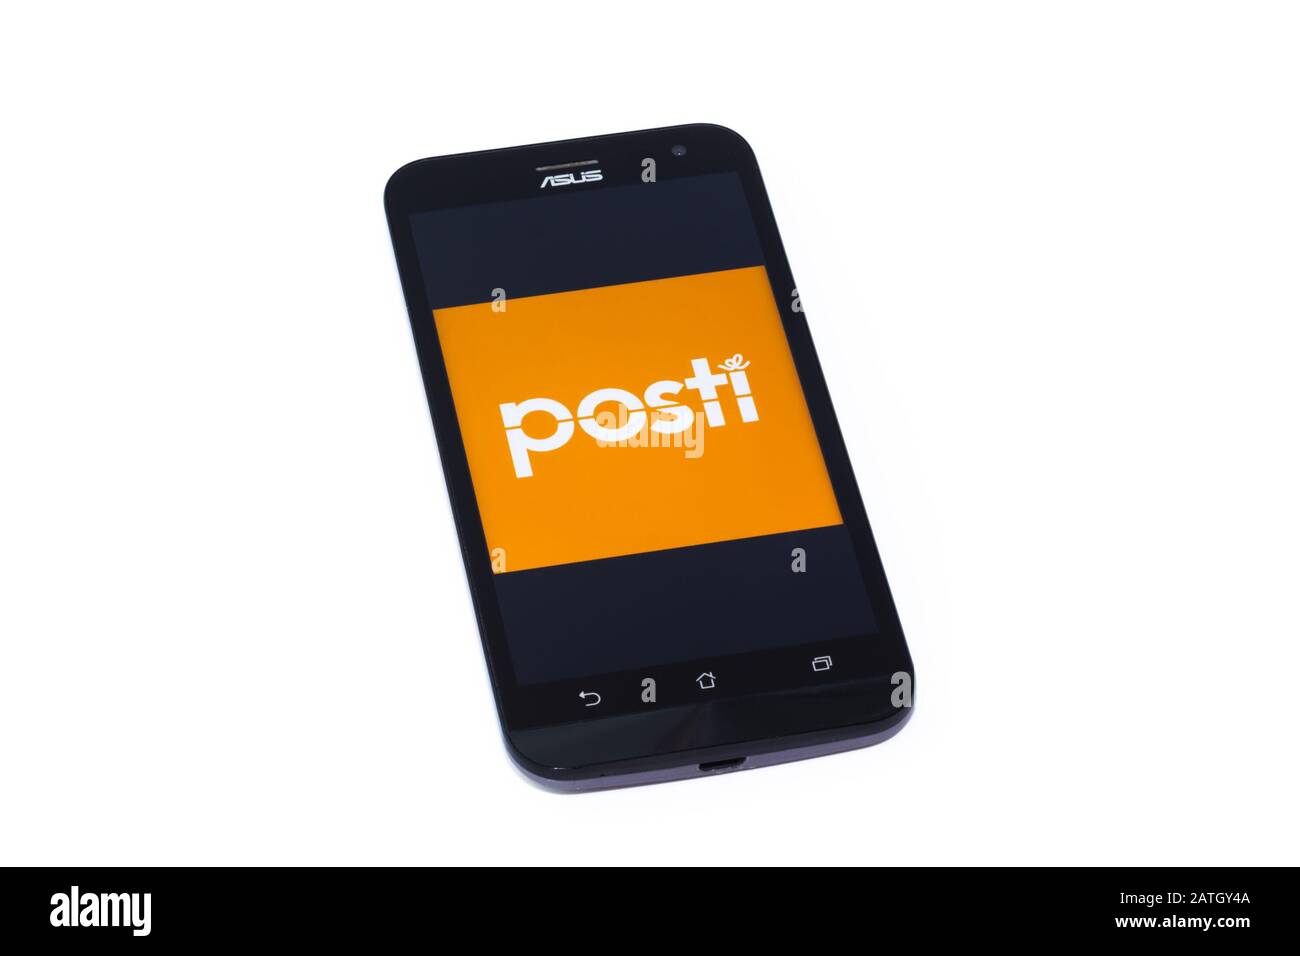 Kouvola, Finland - 23 January 2020: Posti app logo on the screen of smartphone Asus Stock Photo